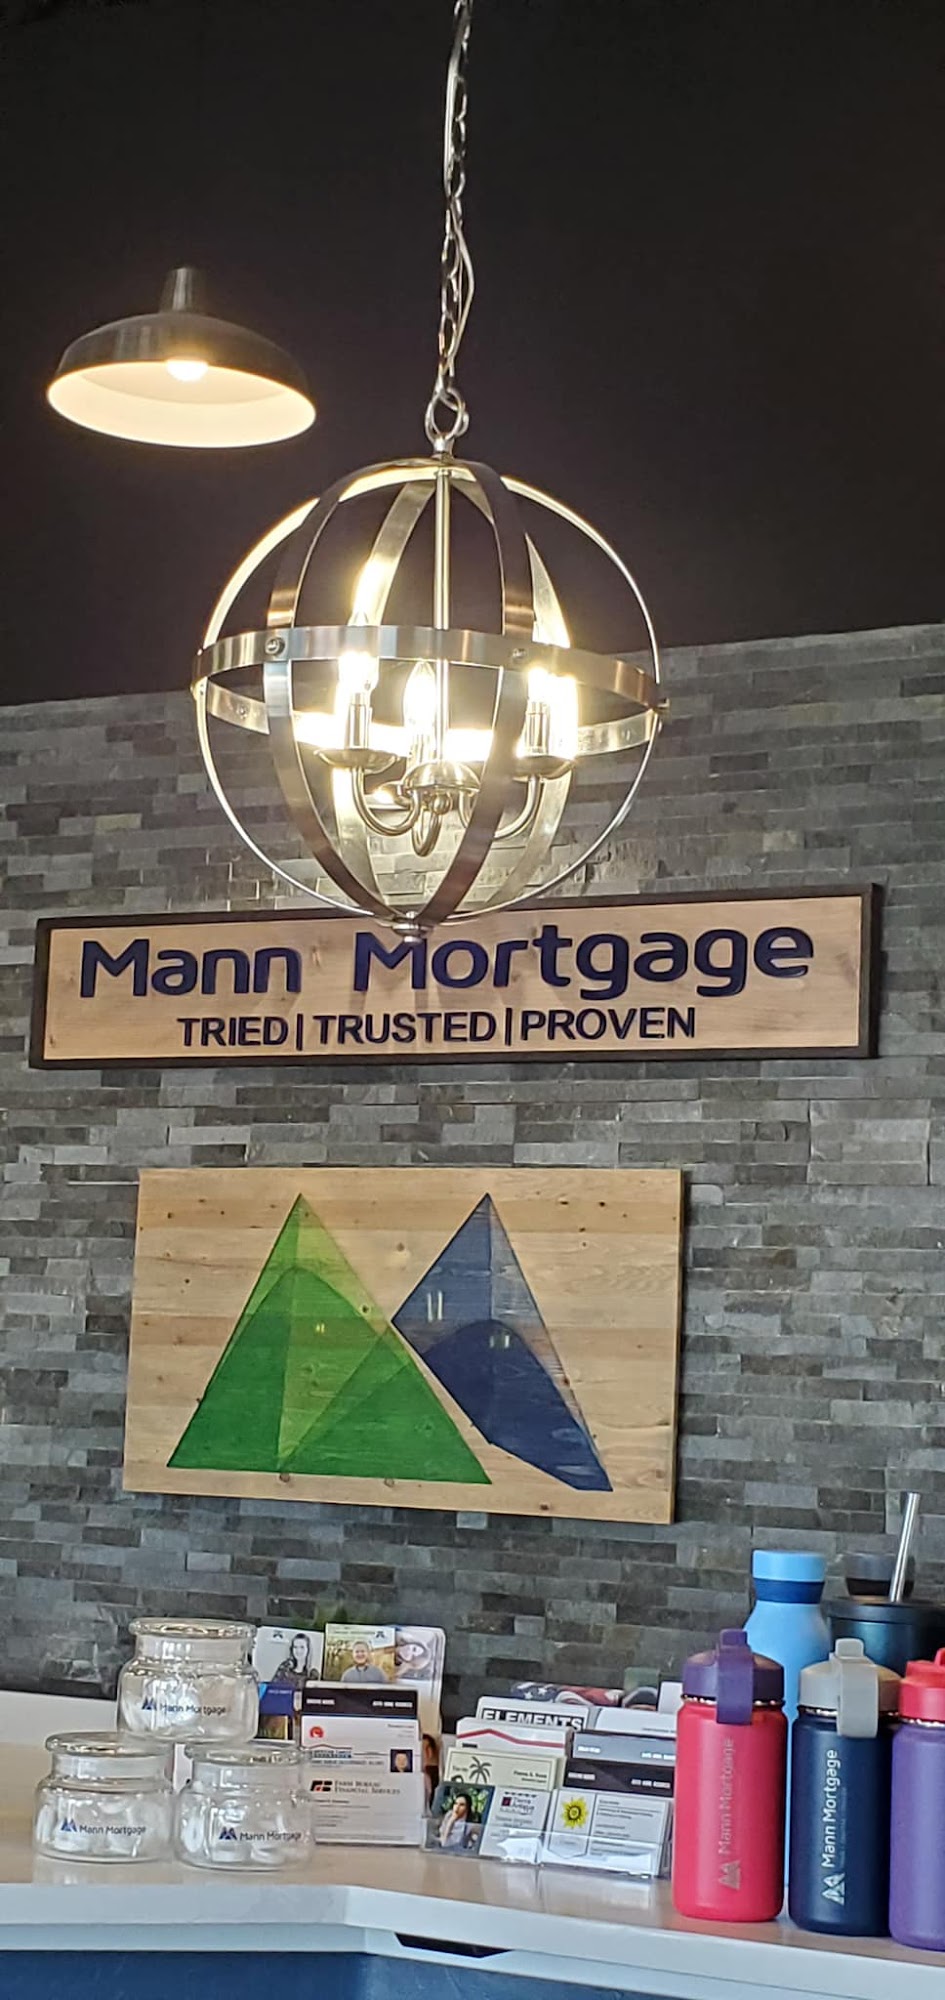 Mann Mortgage 565 S 20th Ave Suite C, Safford Arizona 85546